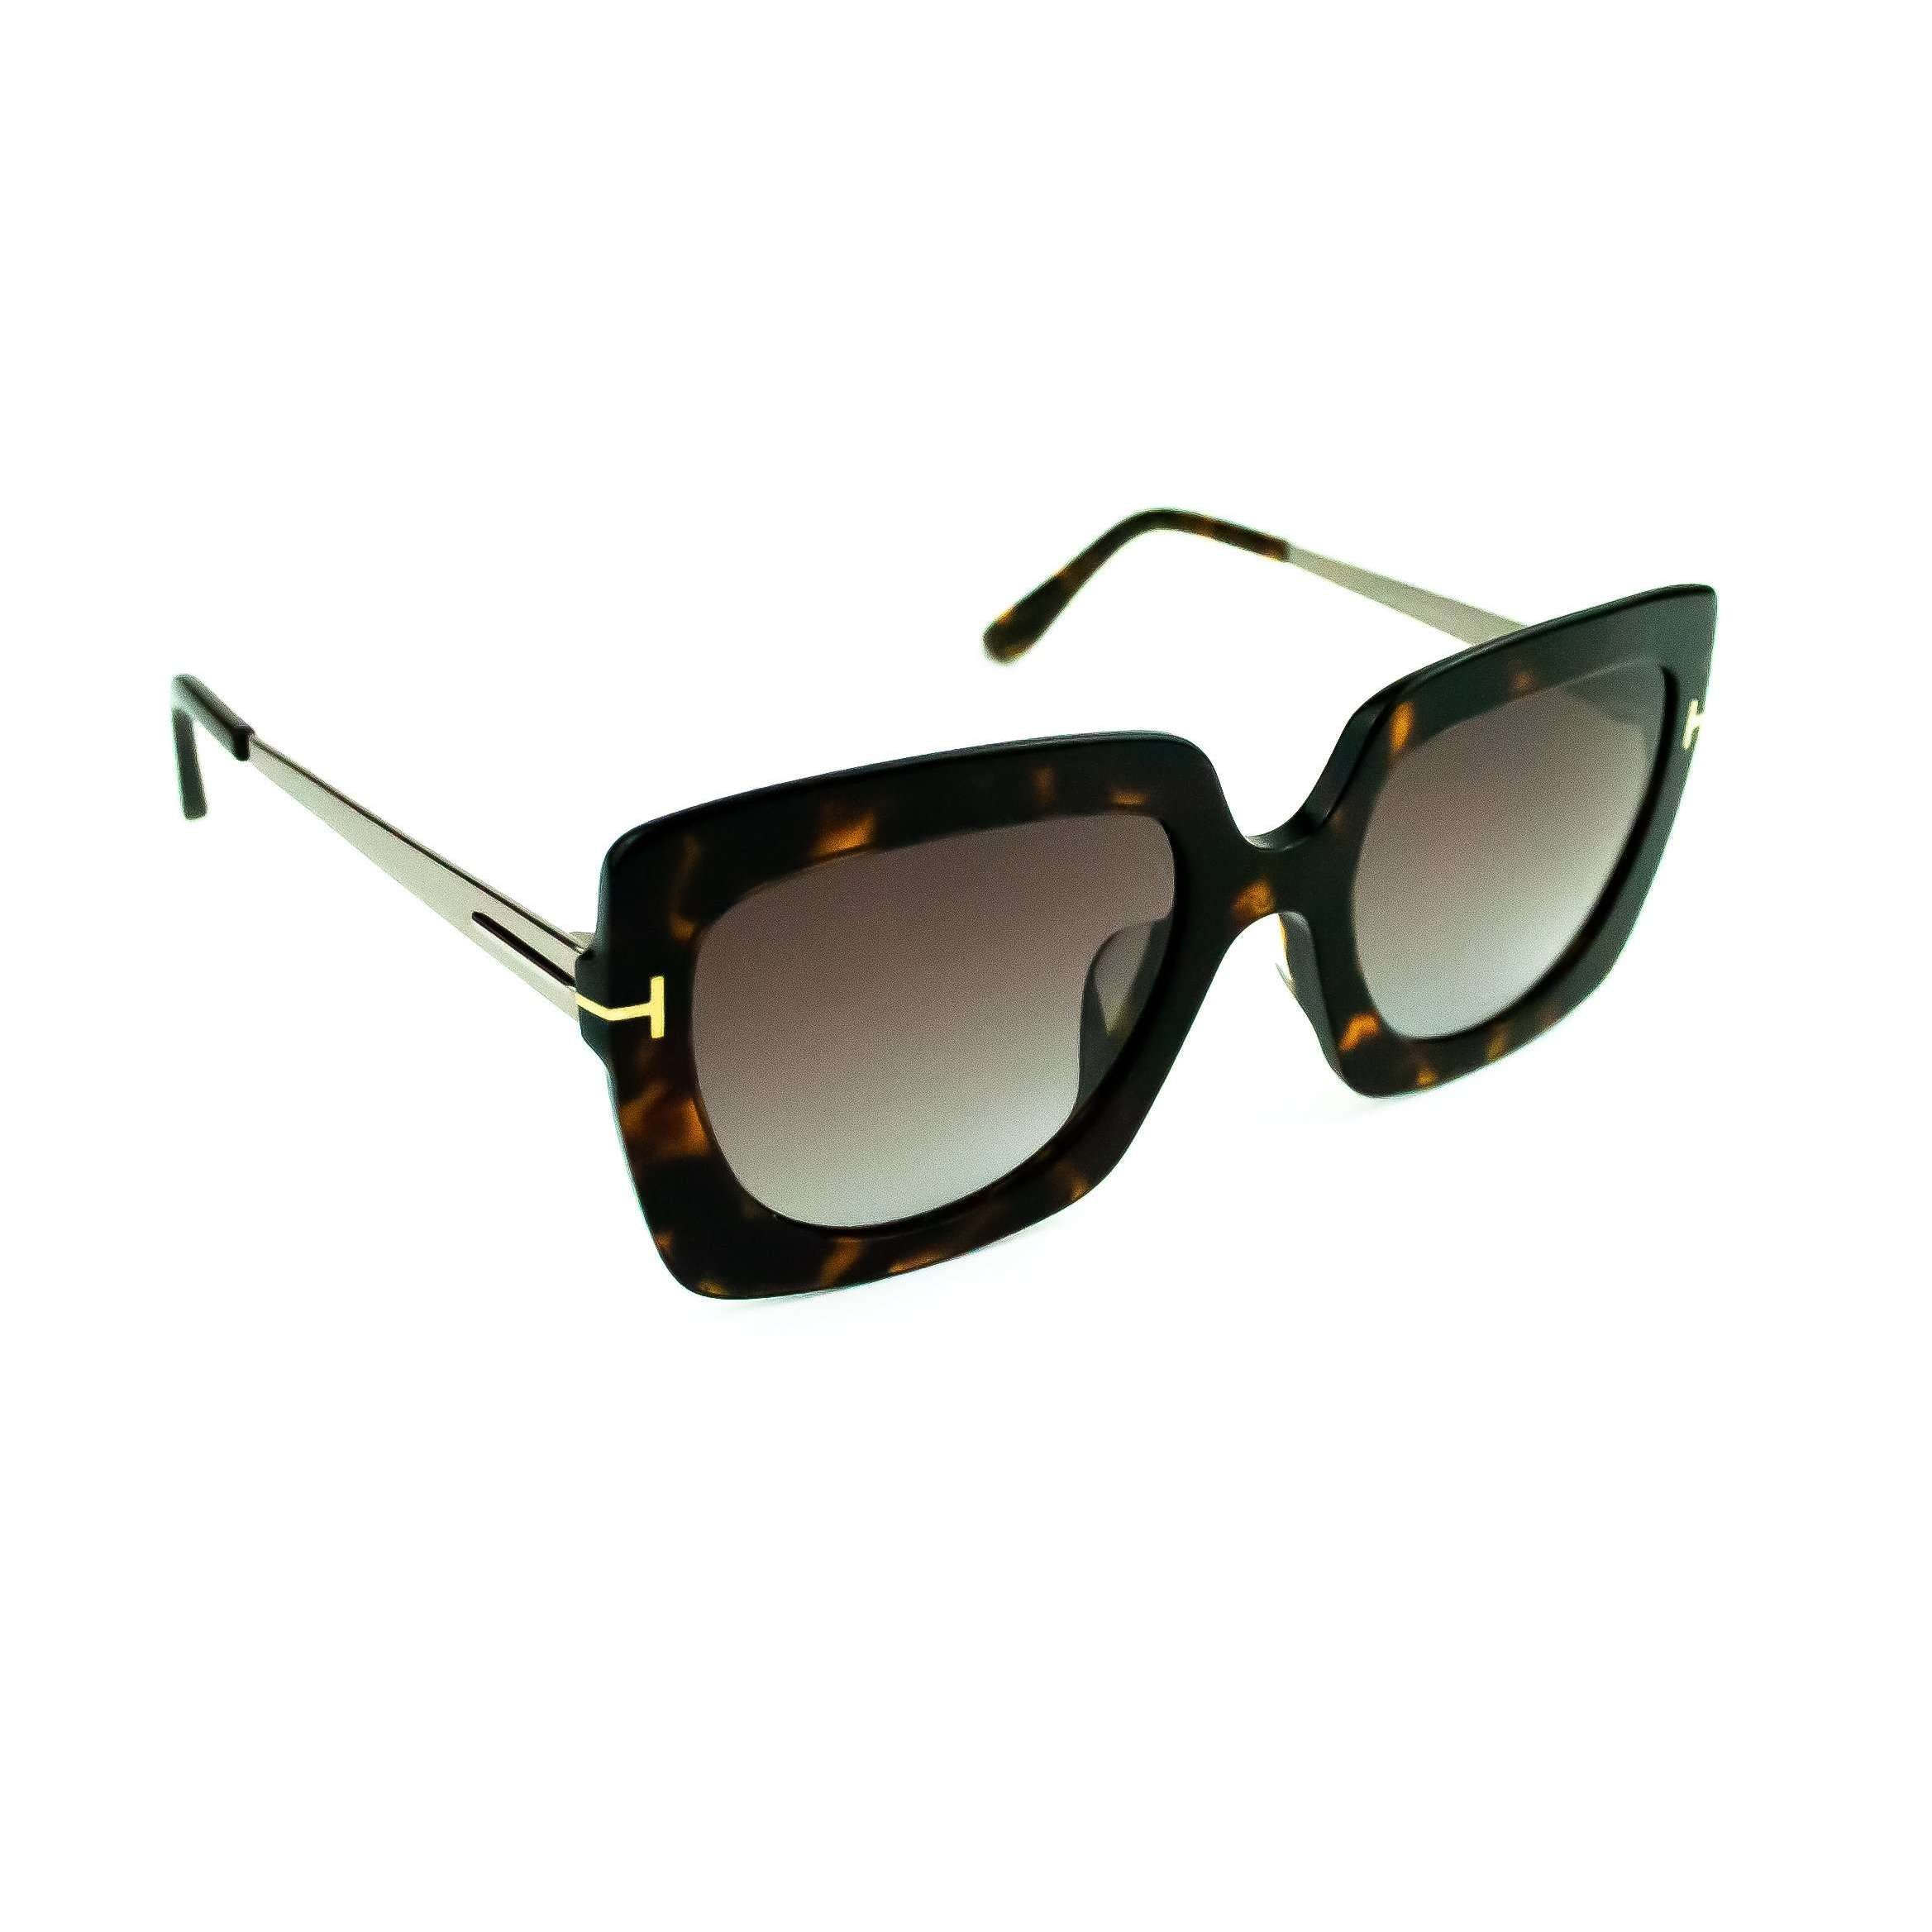 Tom Ford Sunglasses Model Jasmine TF610 Colour 02